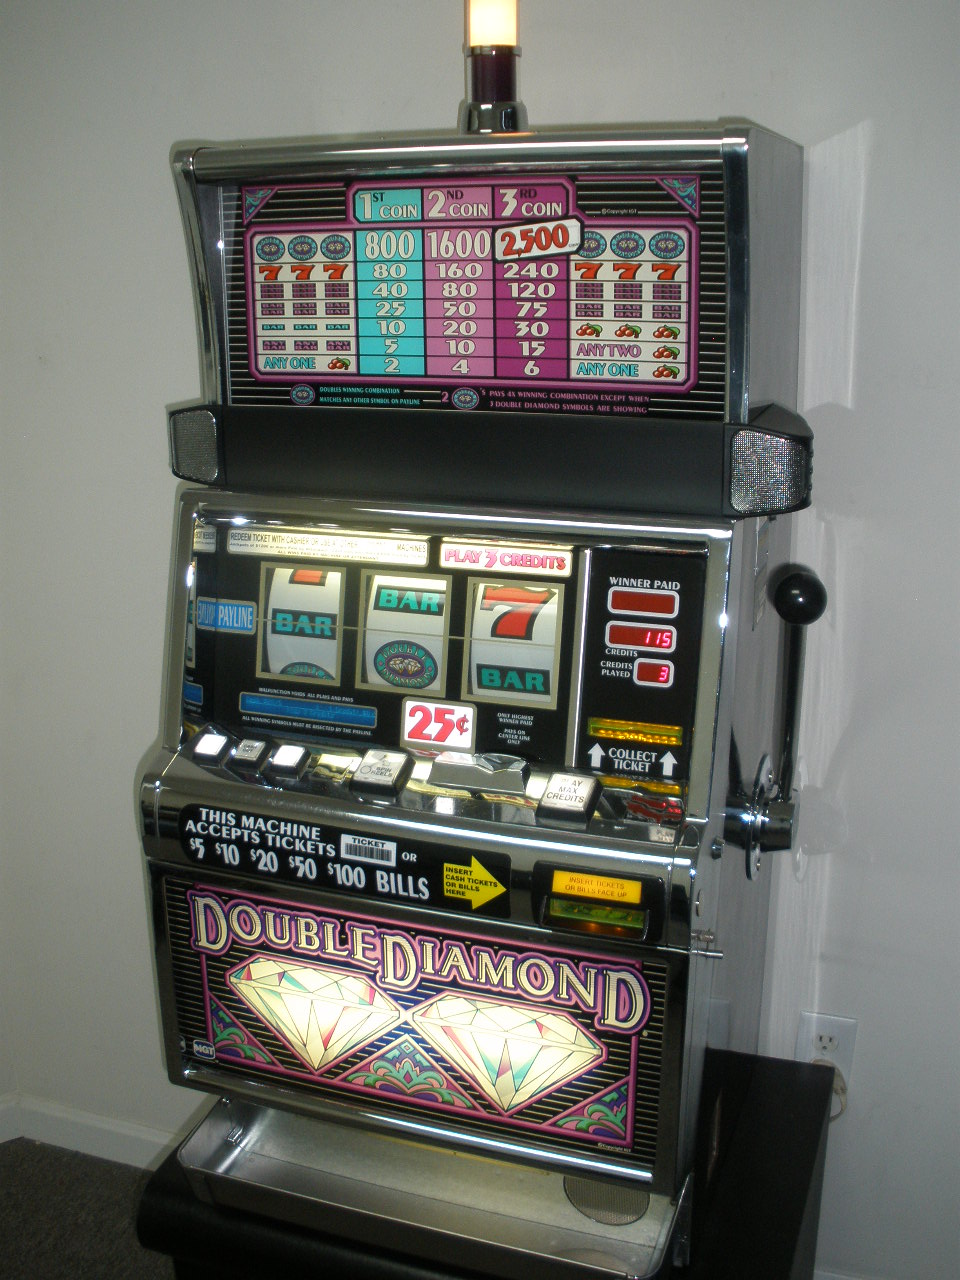 Double Double Diamond Slot Machine